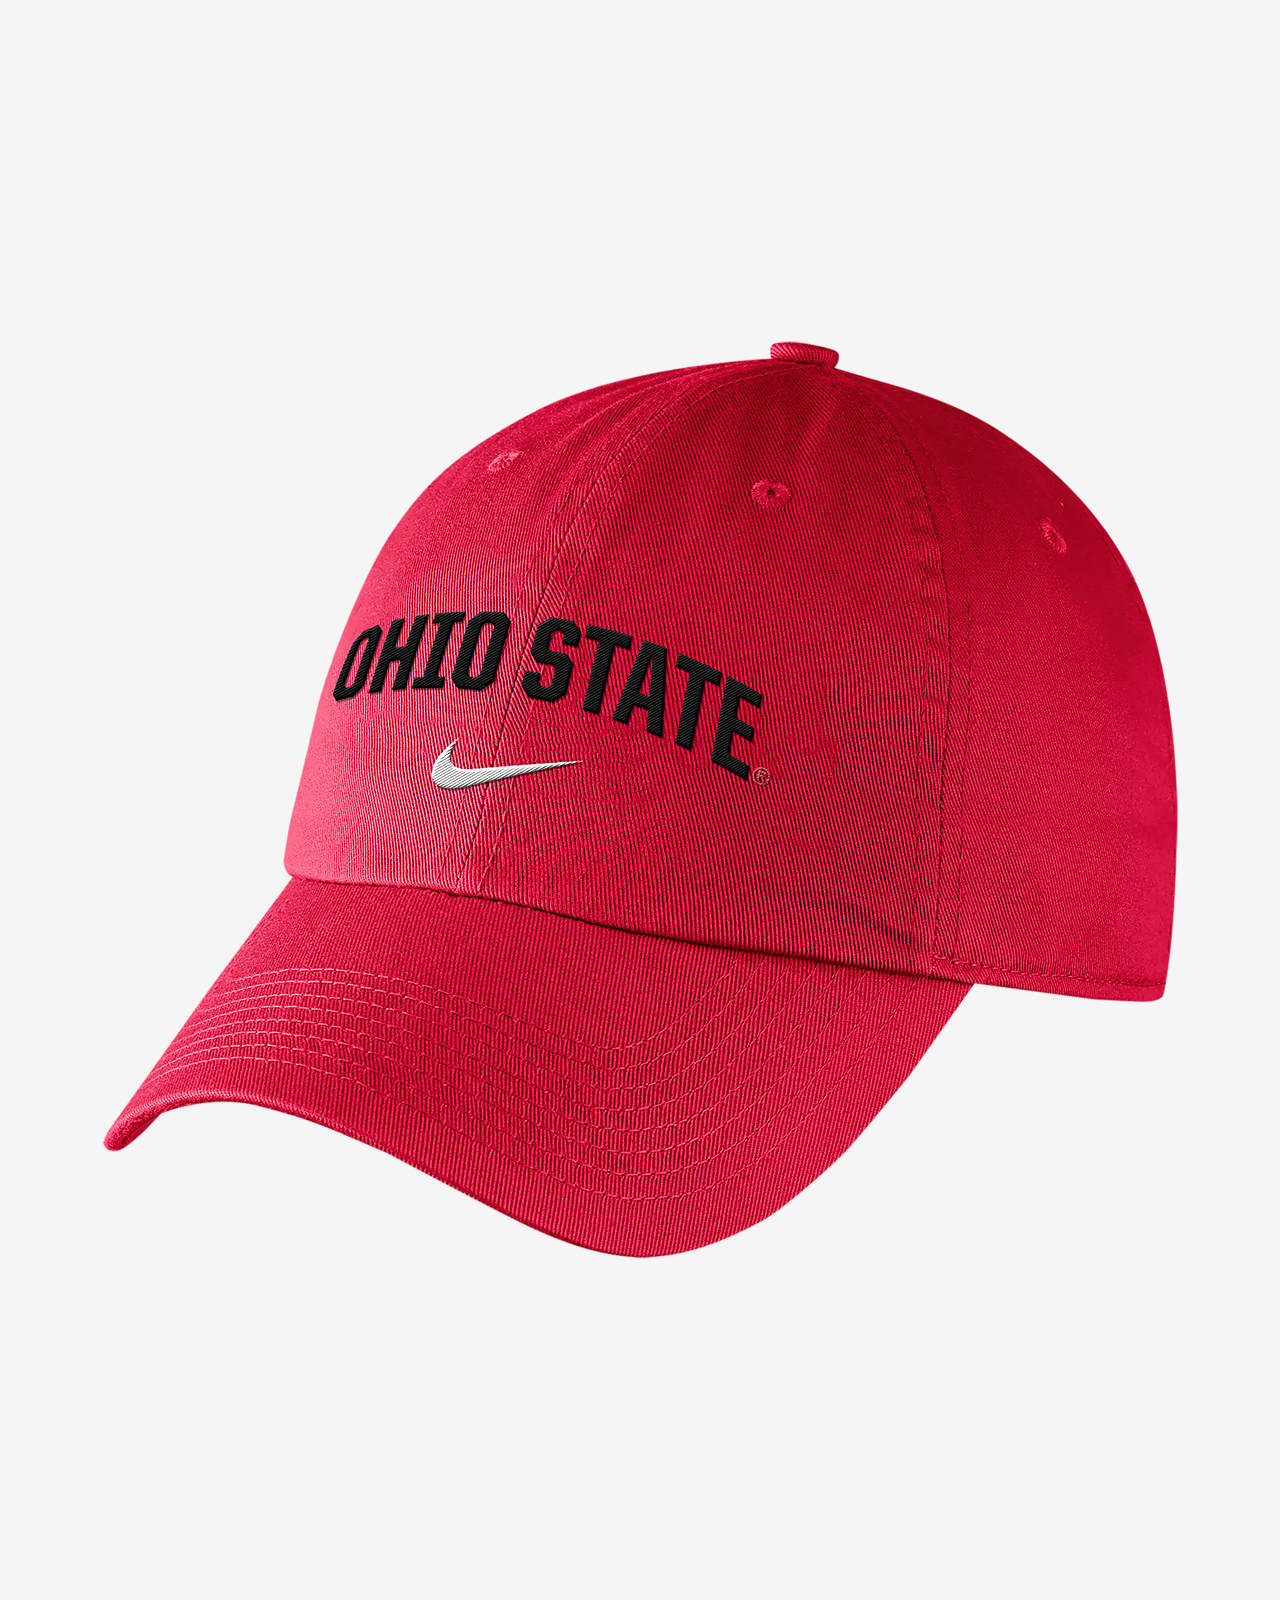 Nike College (Ohio State) Hat